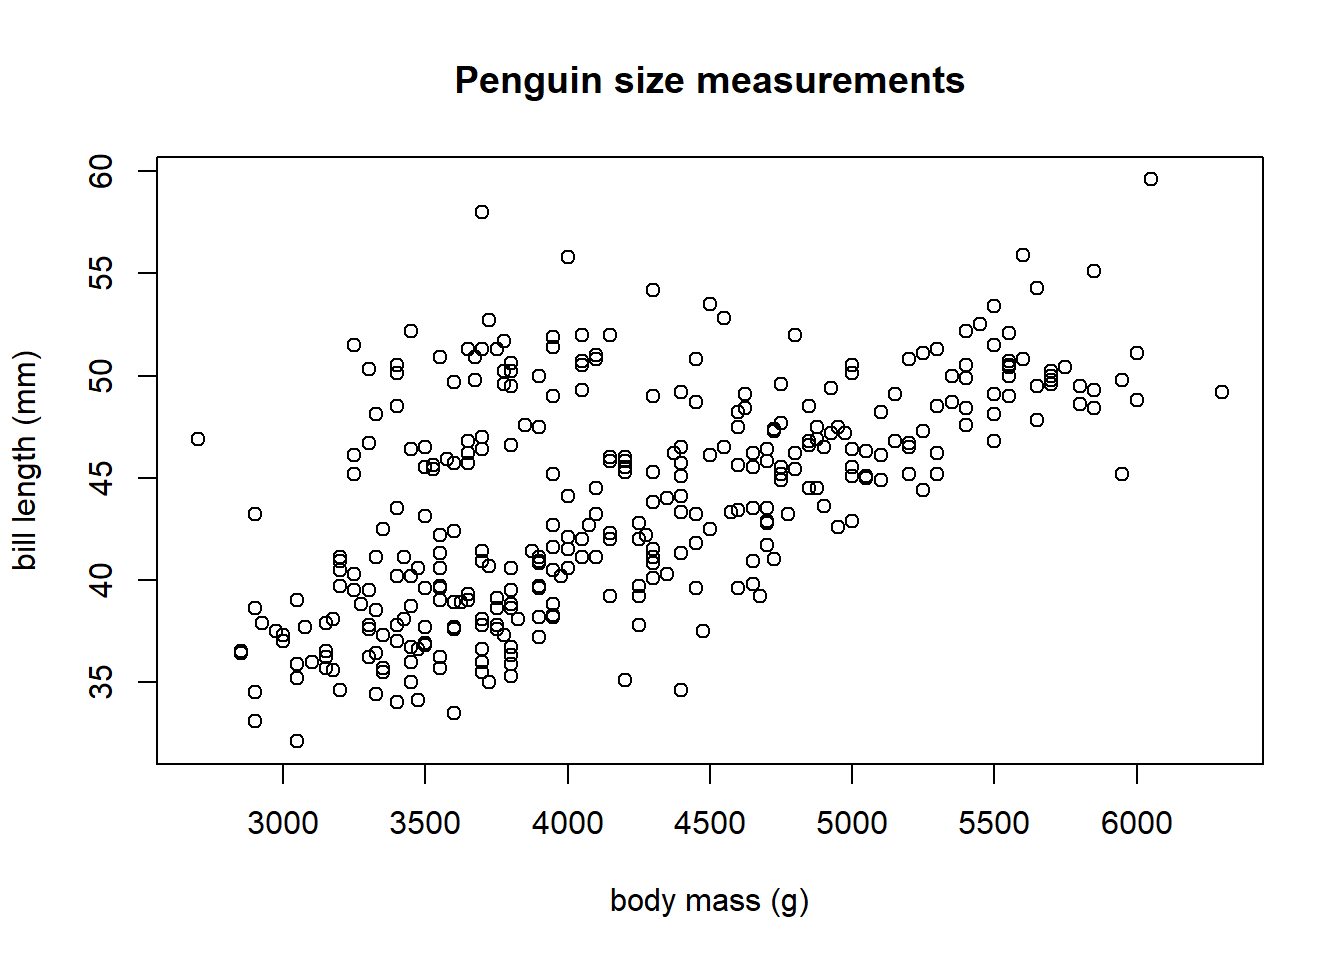 A scatter plot of penguin bill length (mm) versus body mass (g)